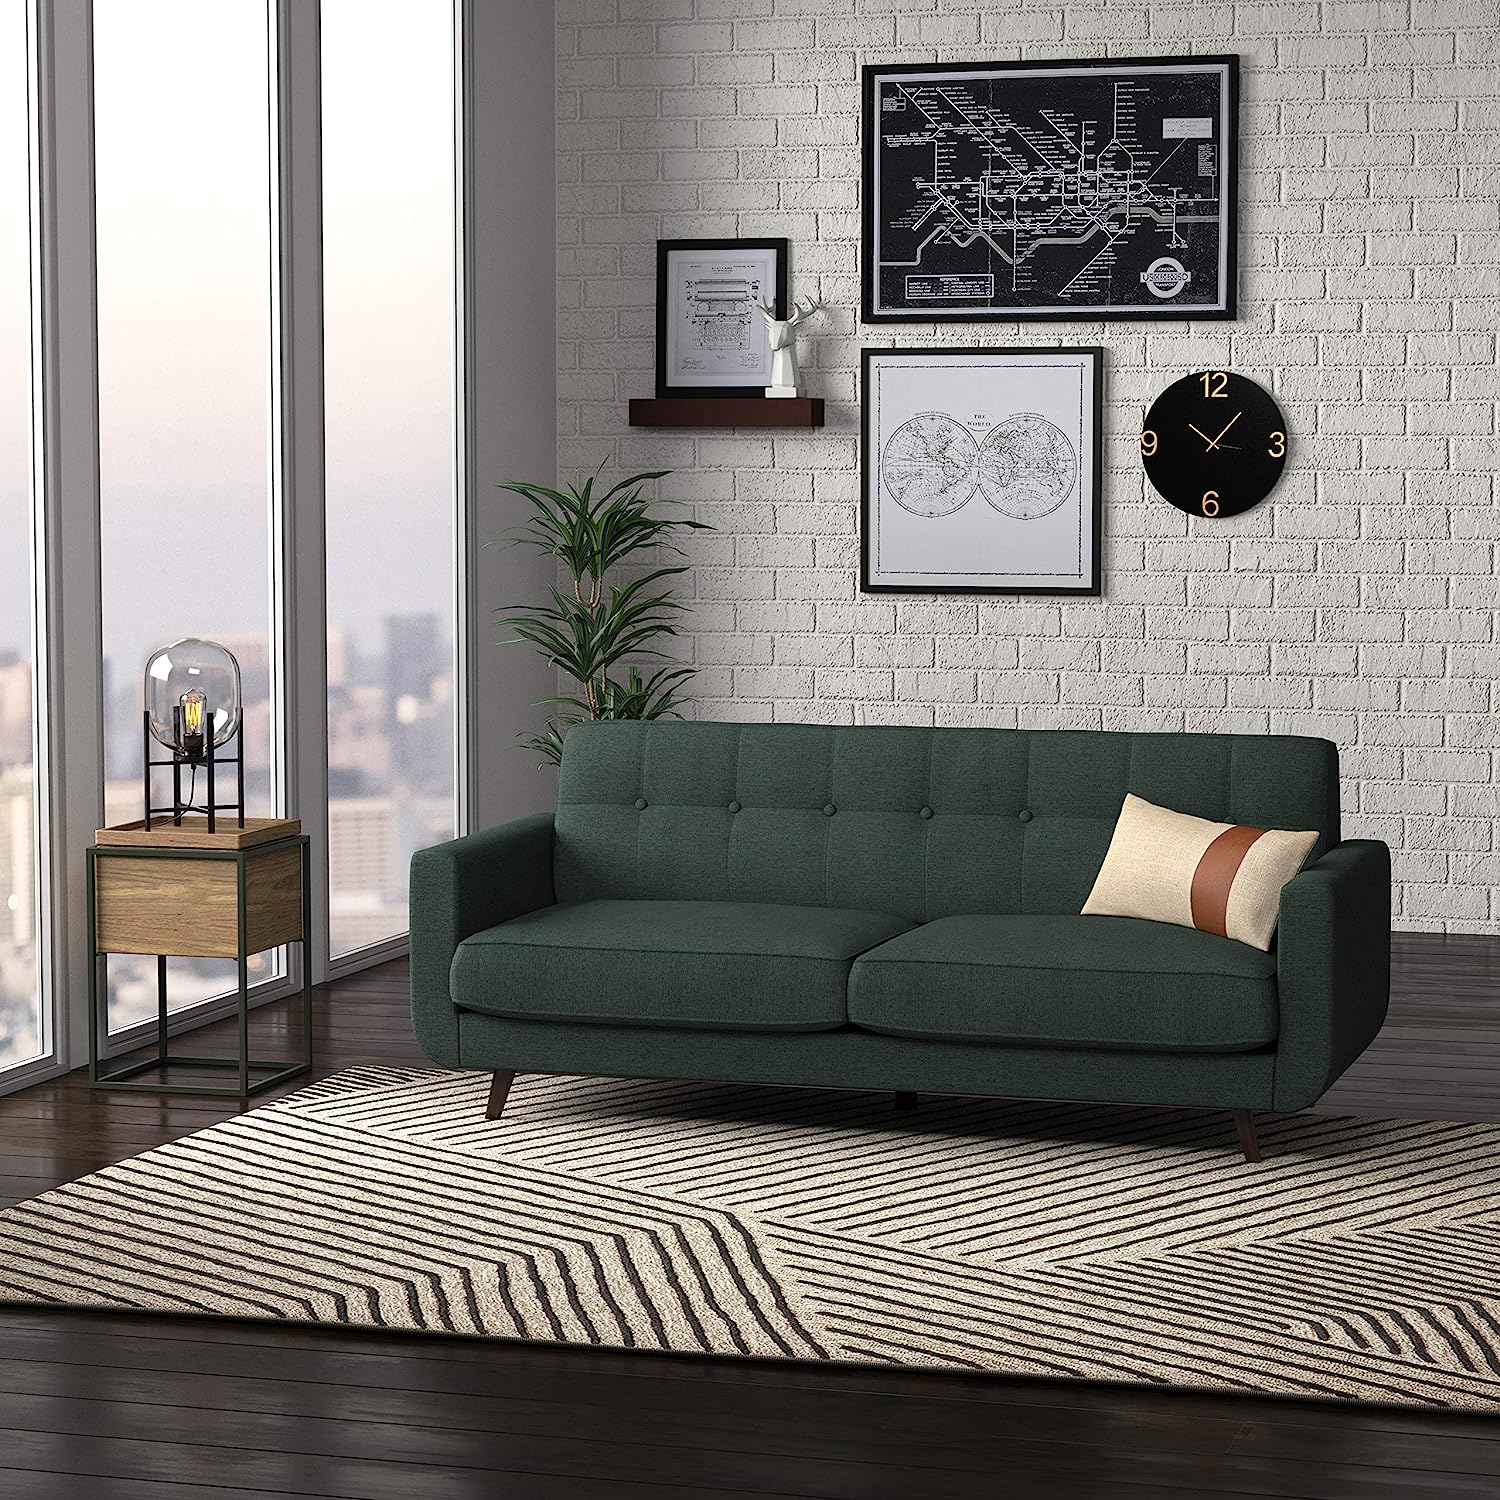 Amazon Brand – Rivet Sloane Mid-Century Modern Sofa Couch, Emerald Green - $860